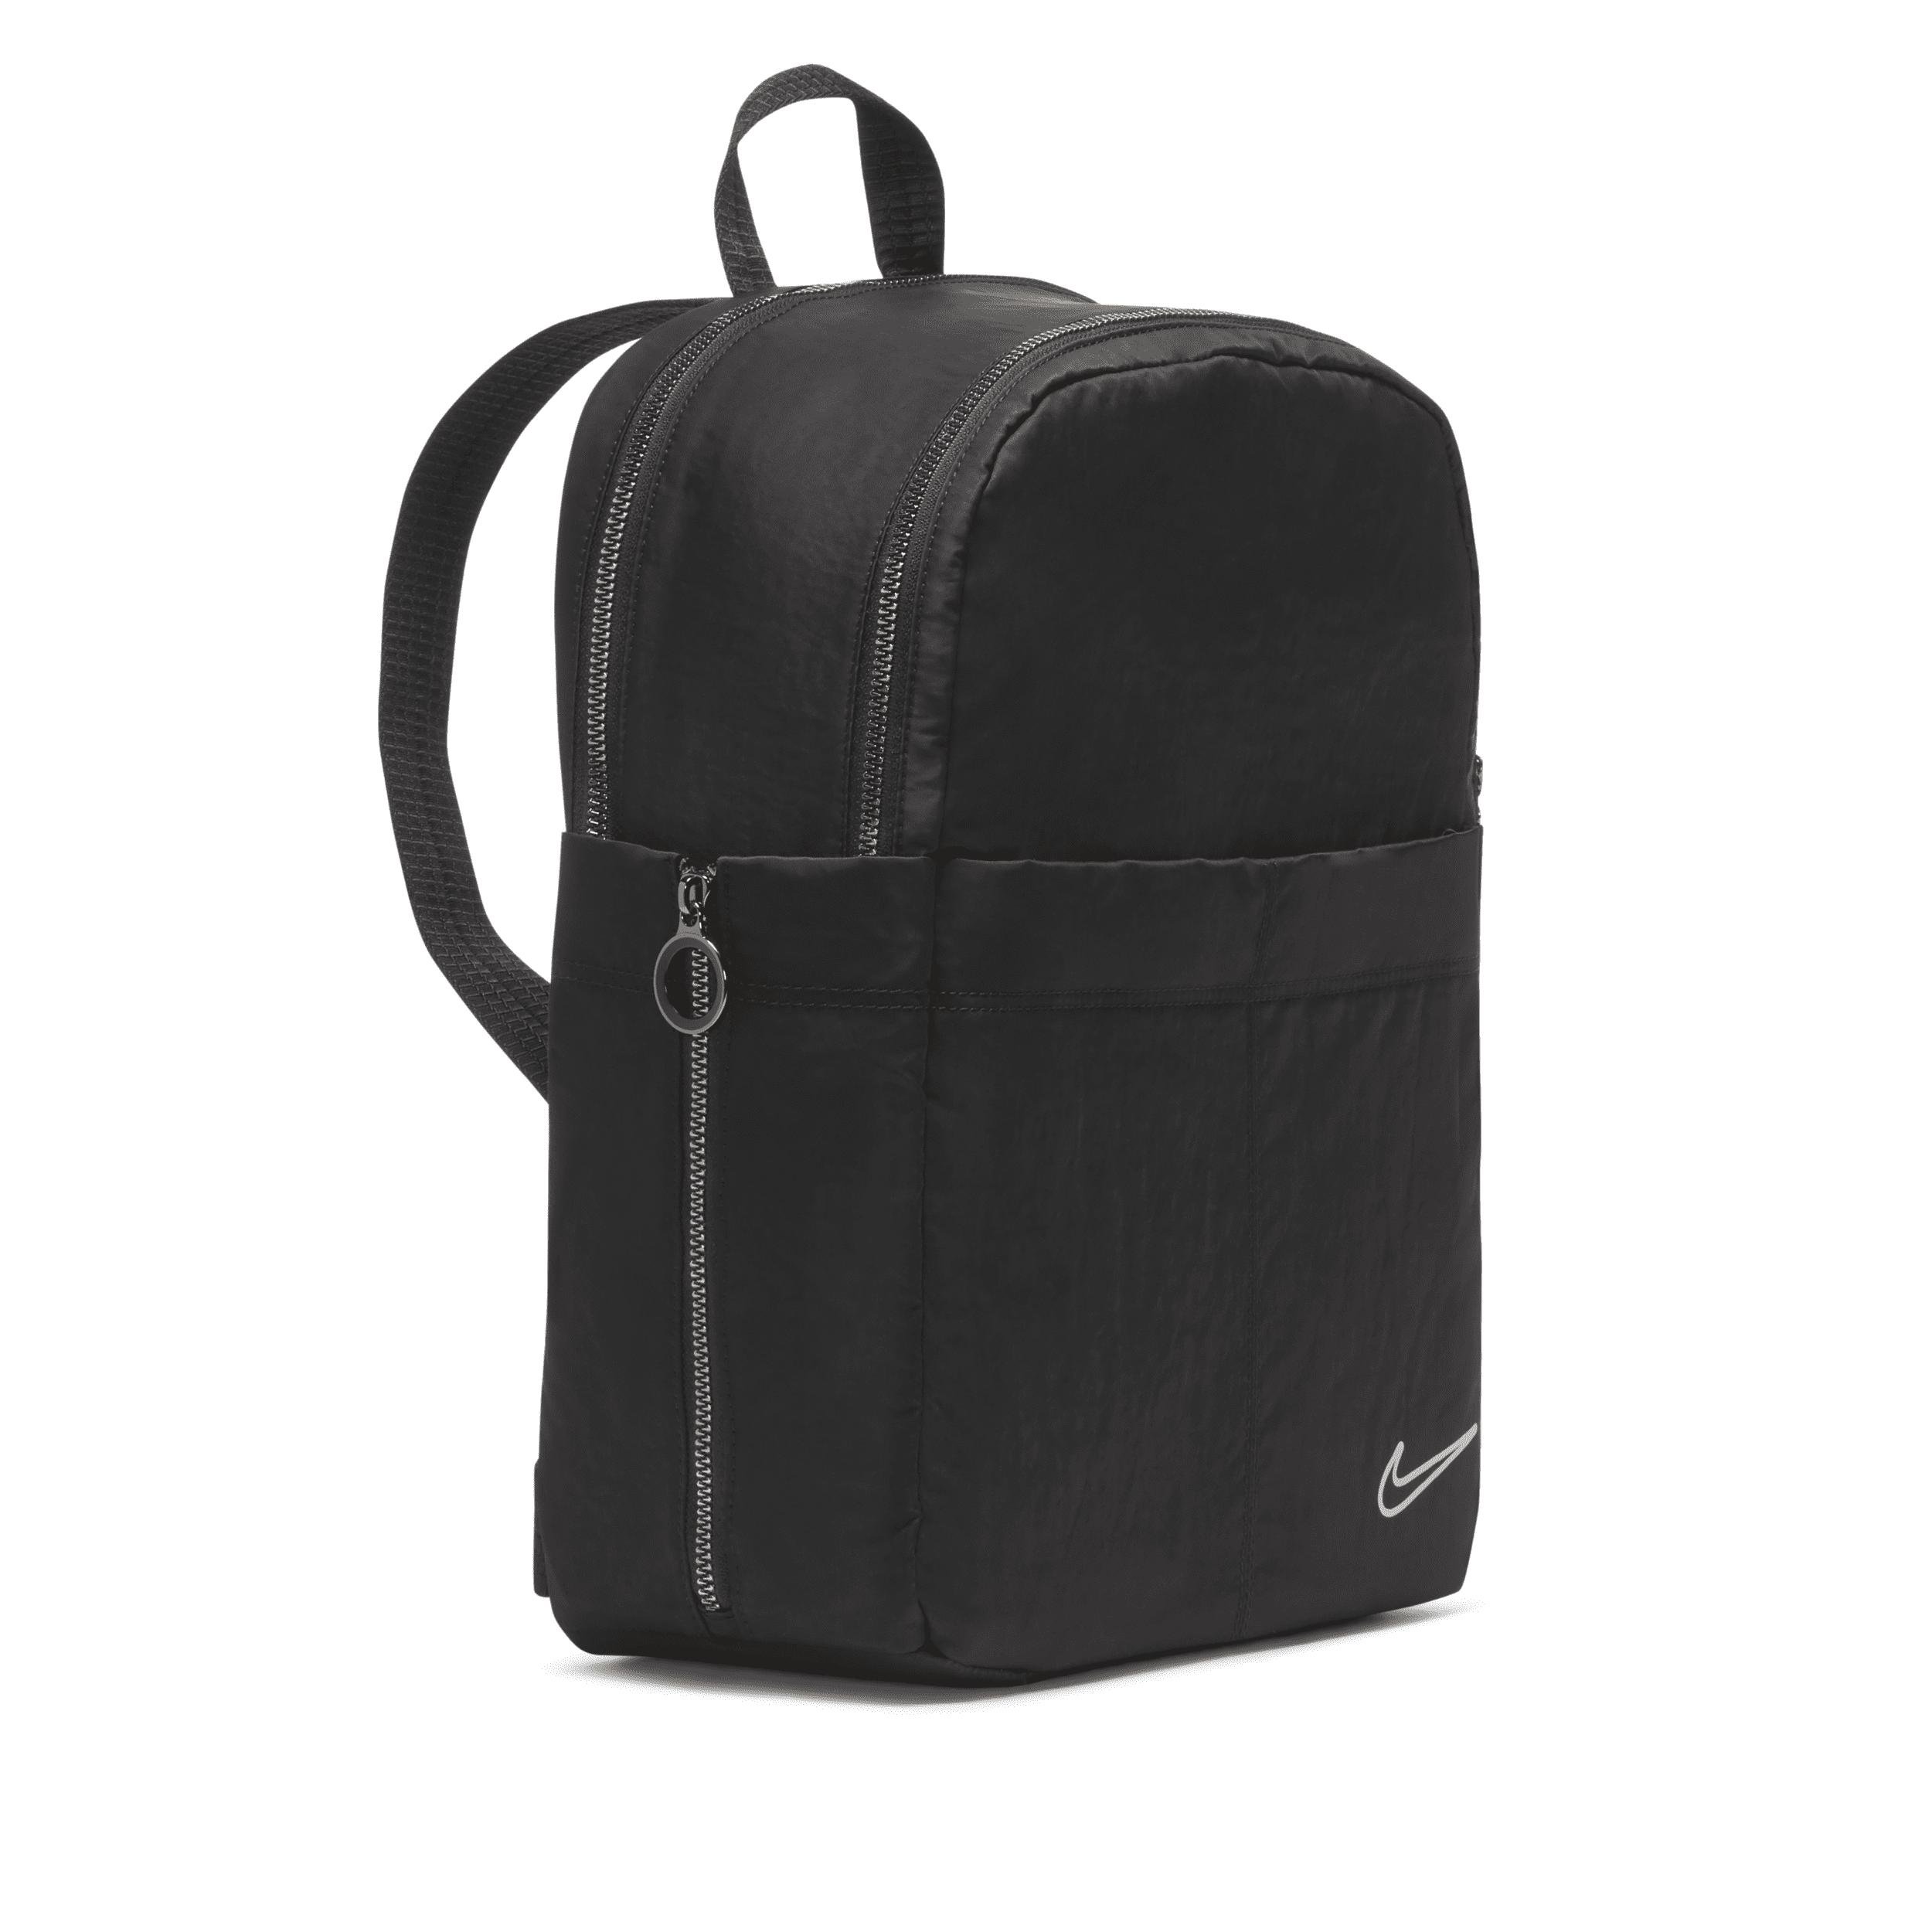 Handbags Nike One Luxe • shop